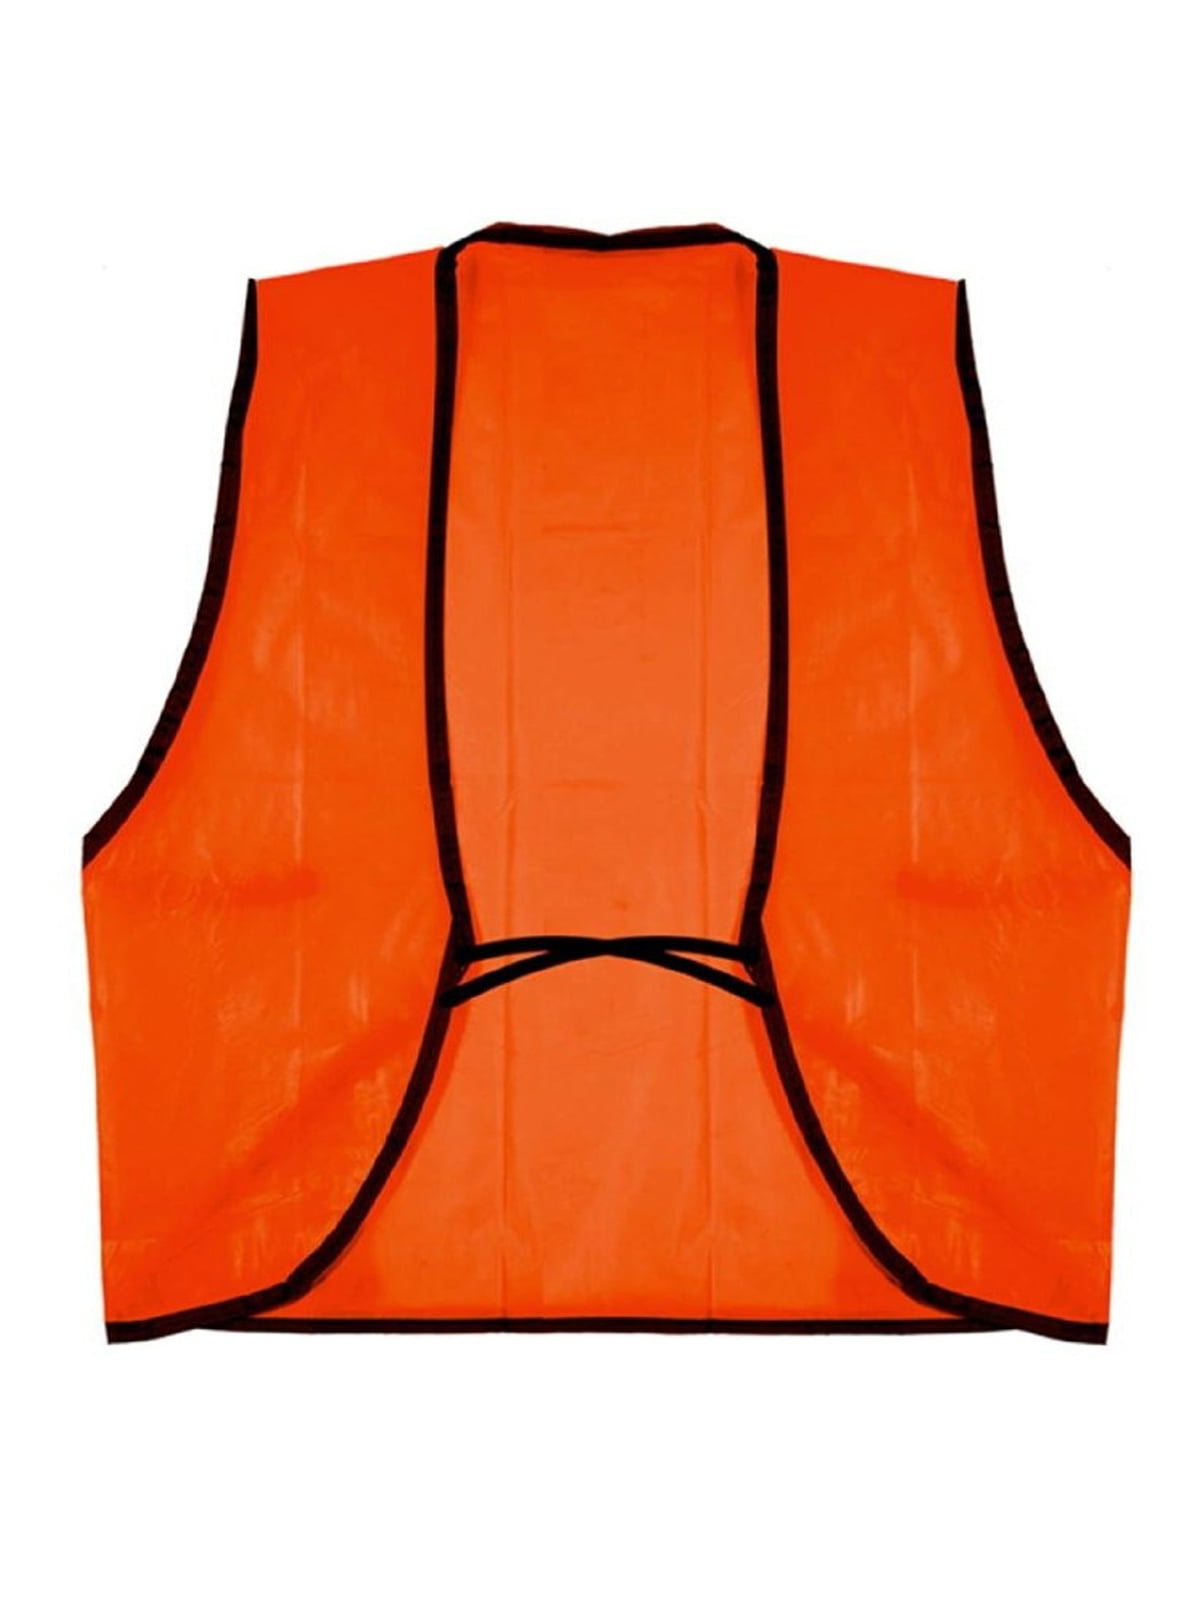 ADULT SIZE ALLEN COMPANY Adults' Blaze Orange Hunting Vest & Hat 